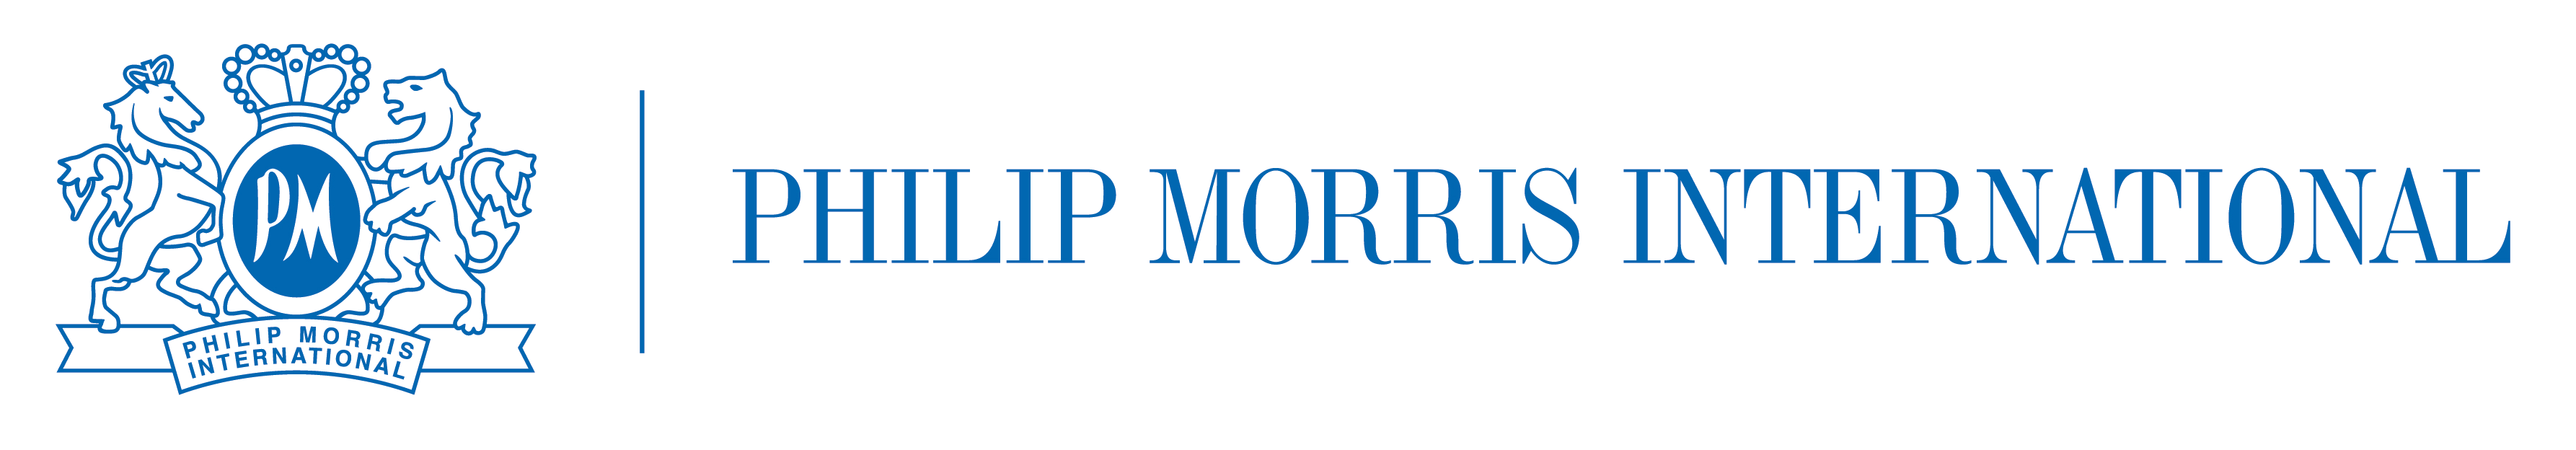 Philip Morris International Logo PNG Image